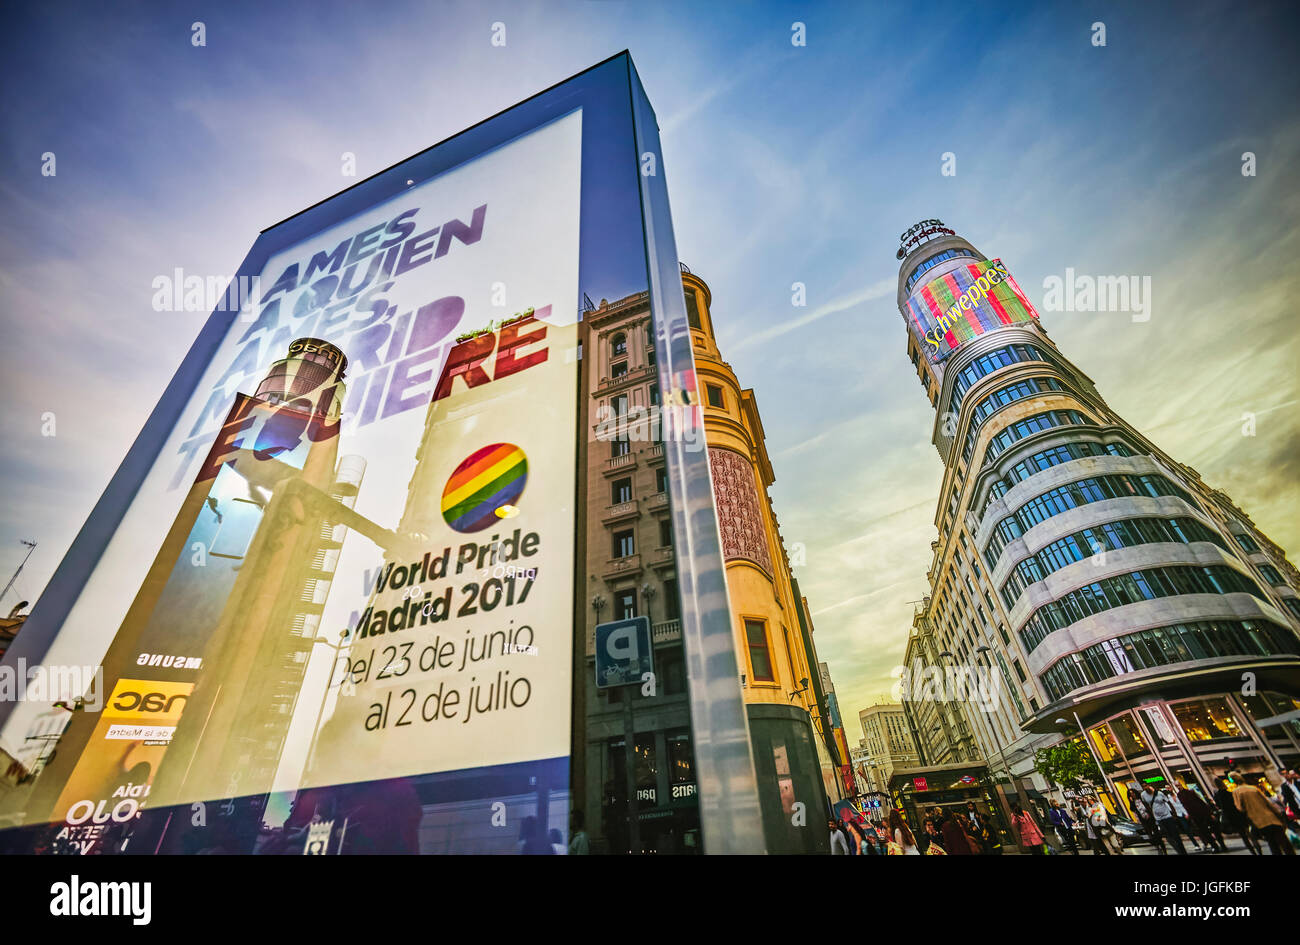 World Pride Madrid 2017 sign at Callao Square. Madrid. Spain. Stock Photo